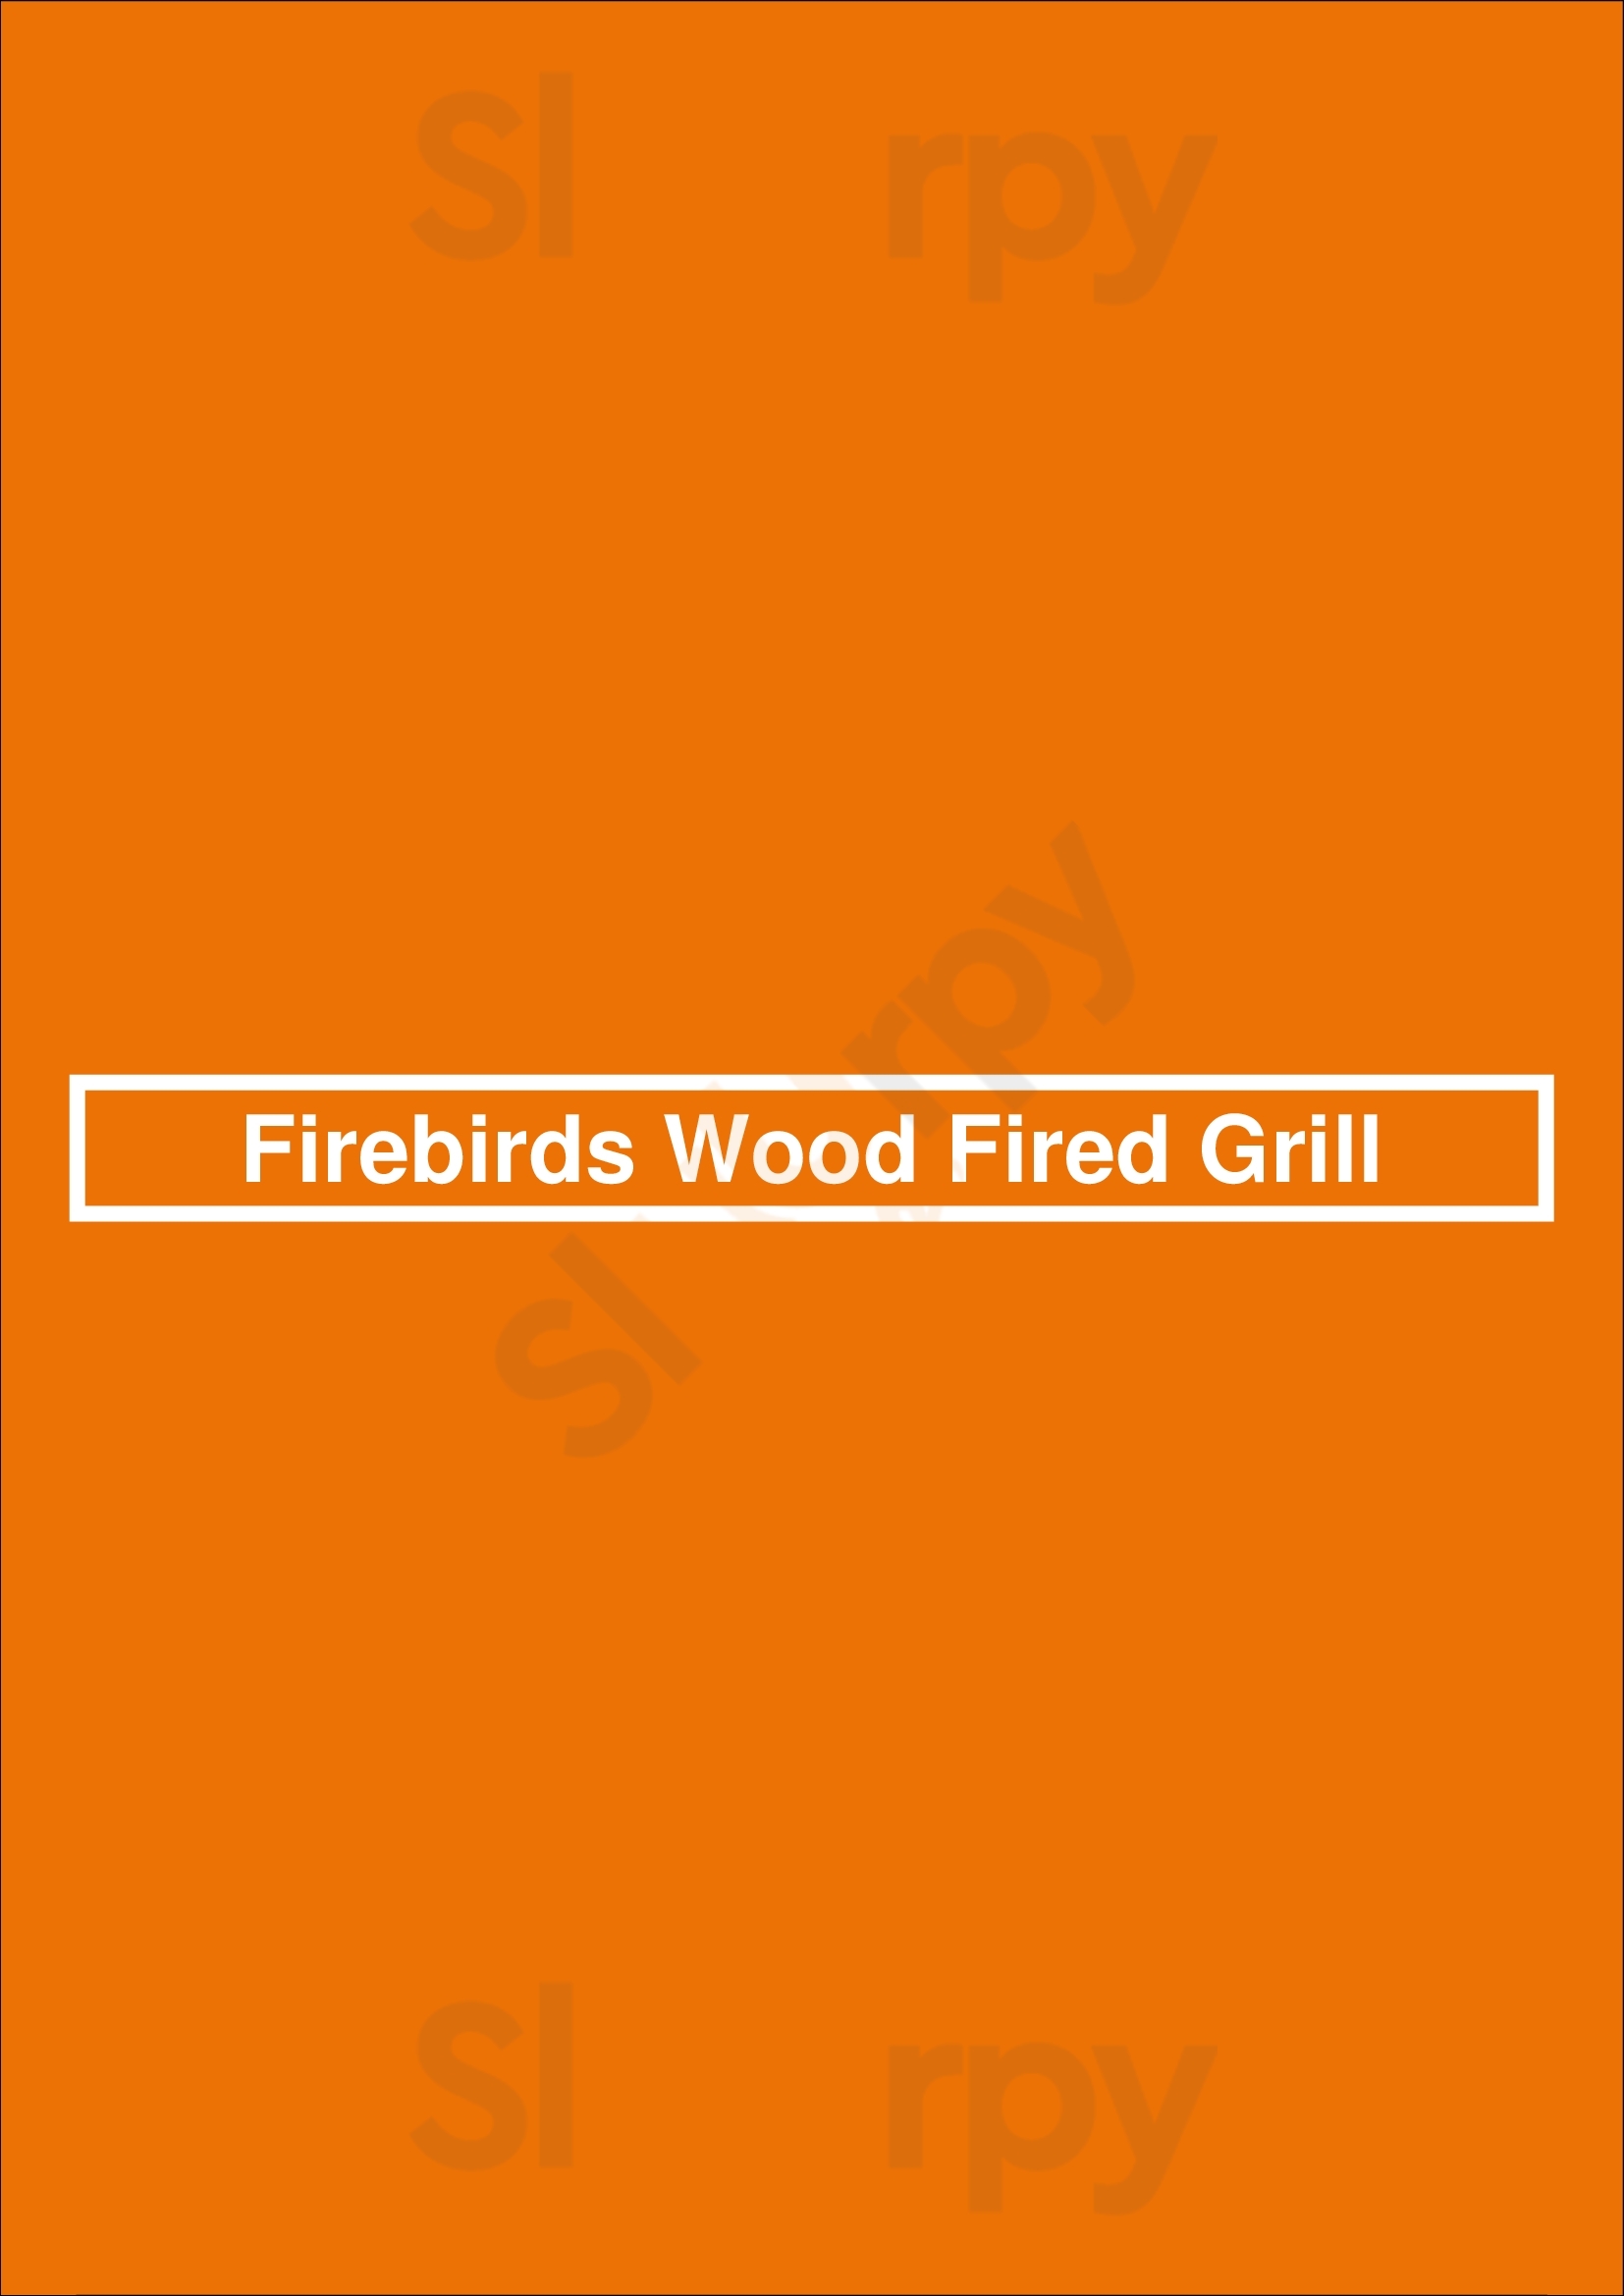 Firebirds Wood Fired Grill Niles Menu - 1